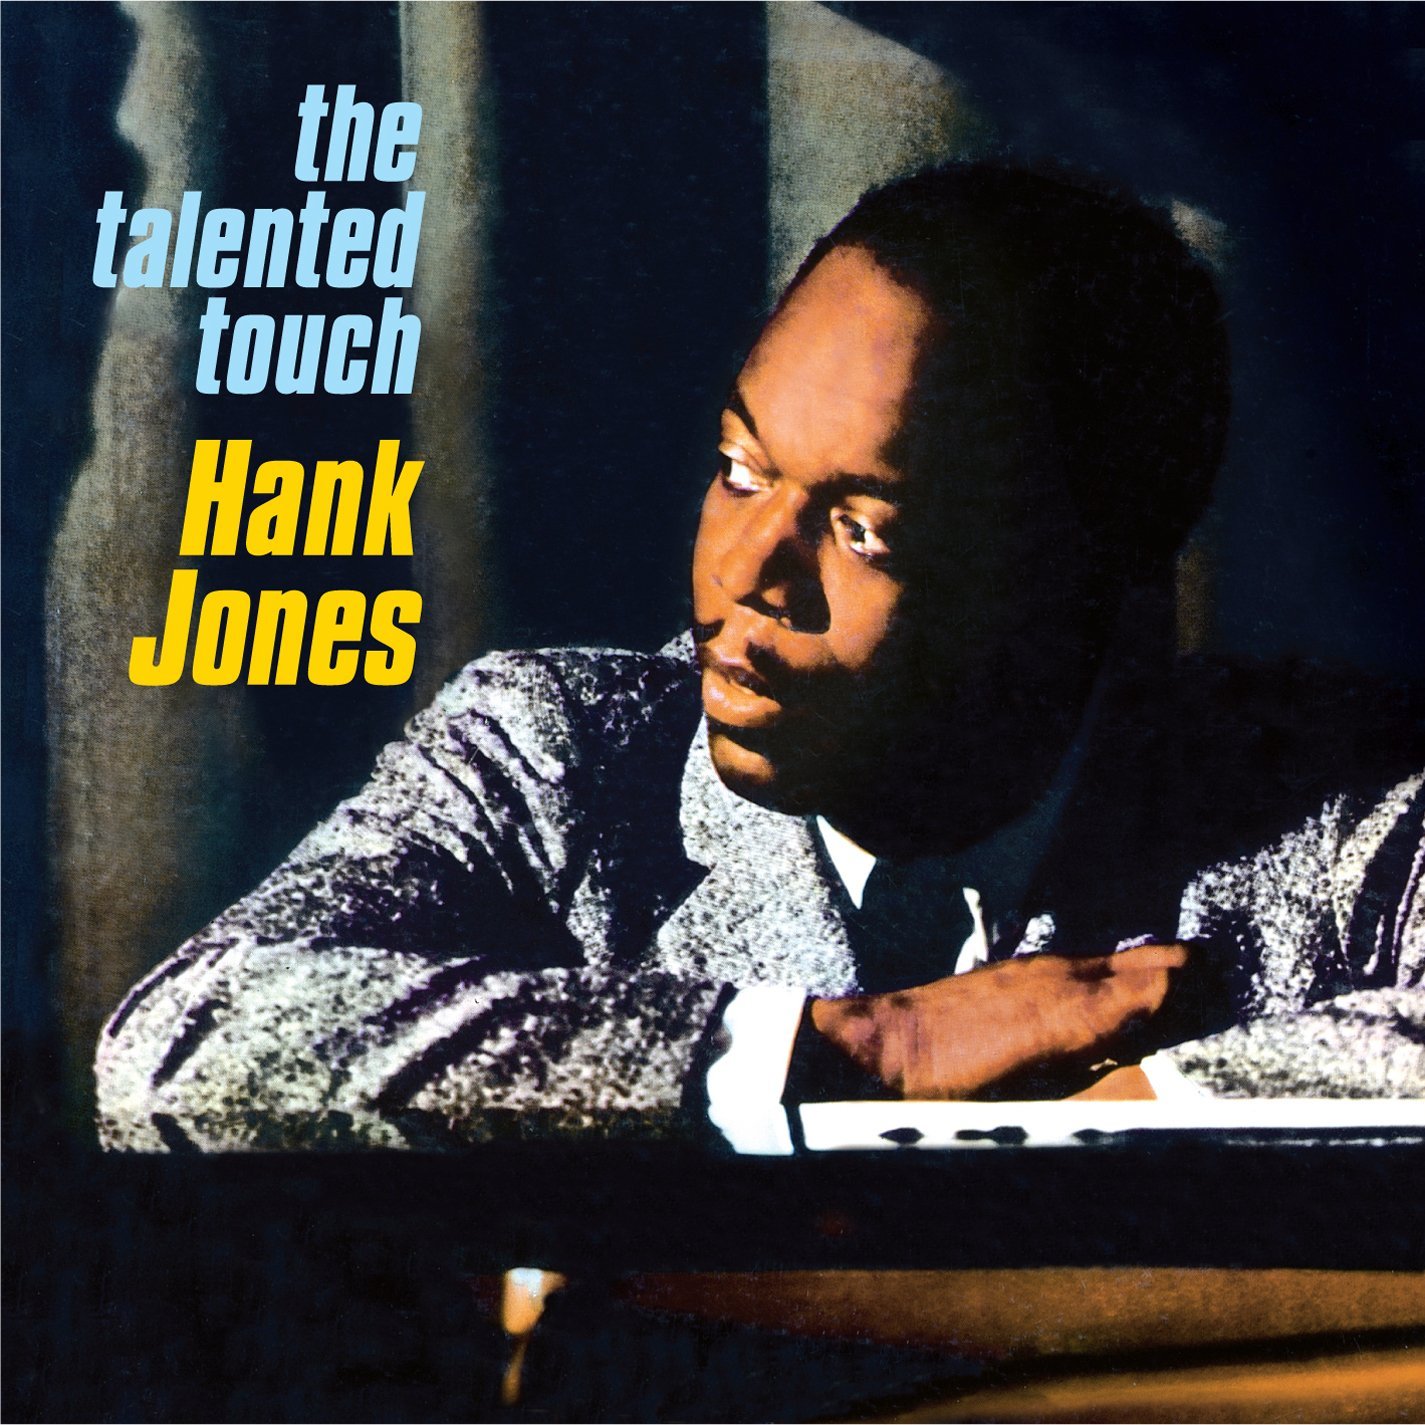 Hank Jones - The Talented Touch (1958)